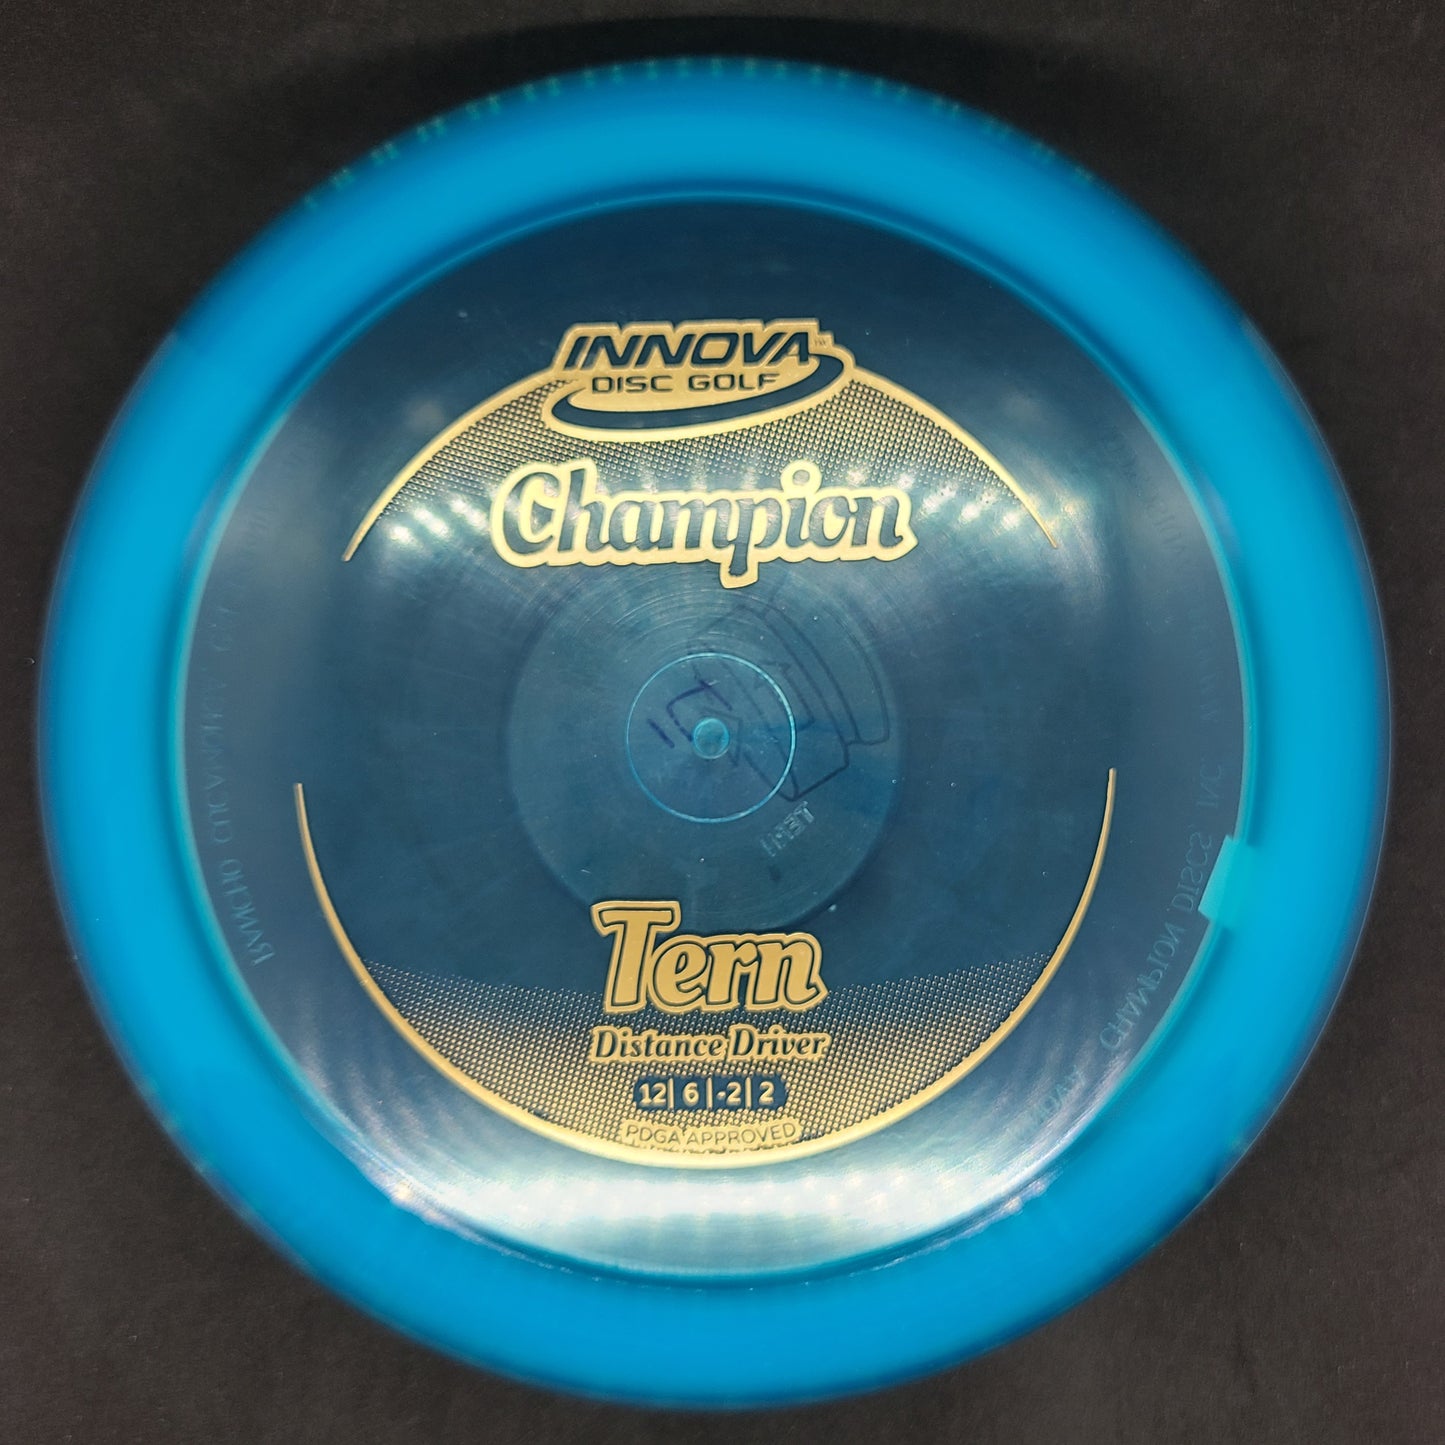 Innova - Tern - Champion